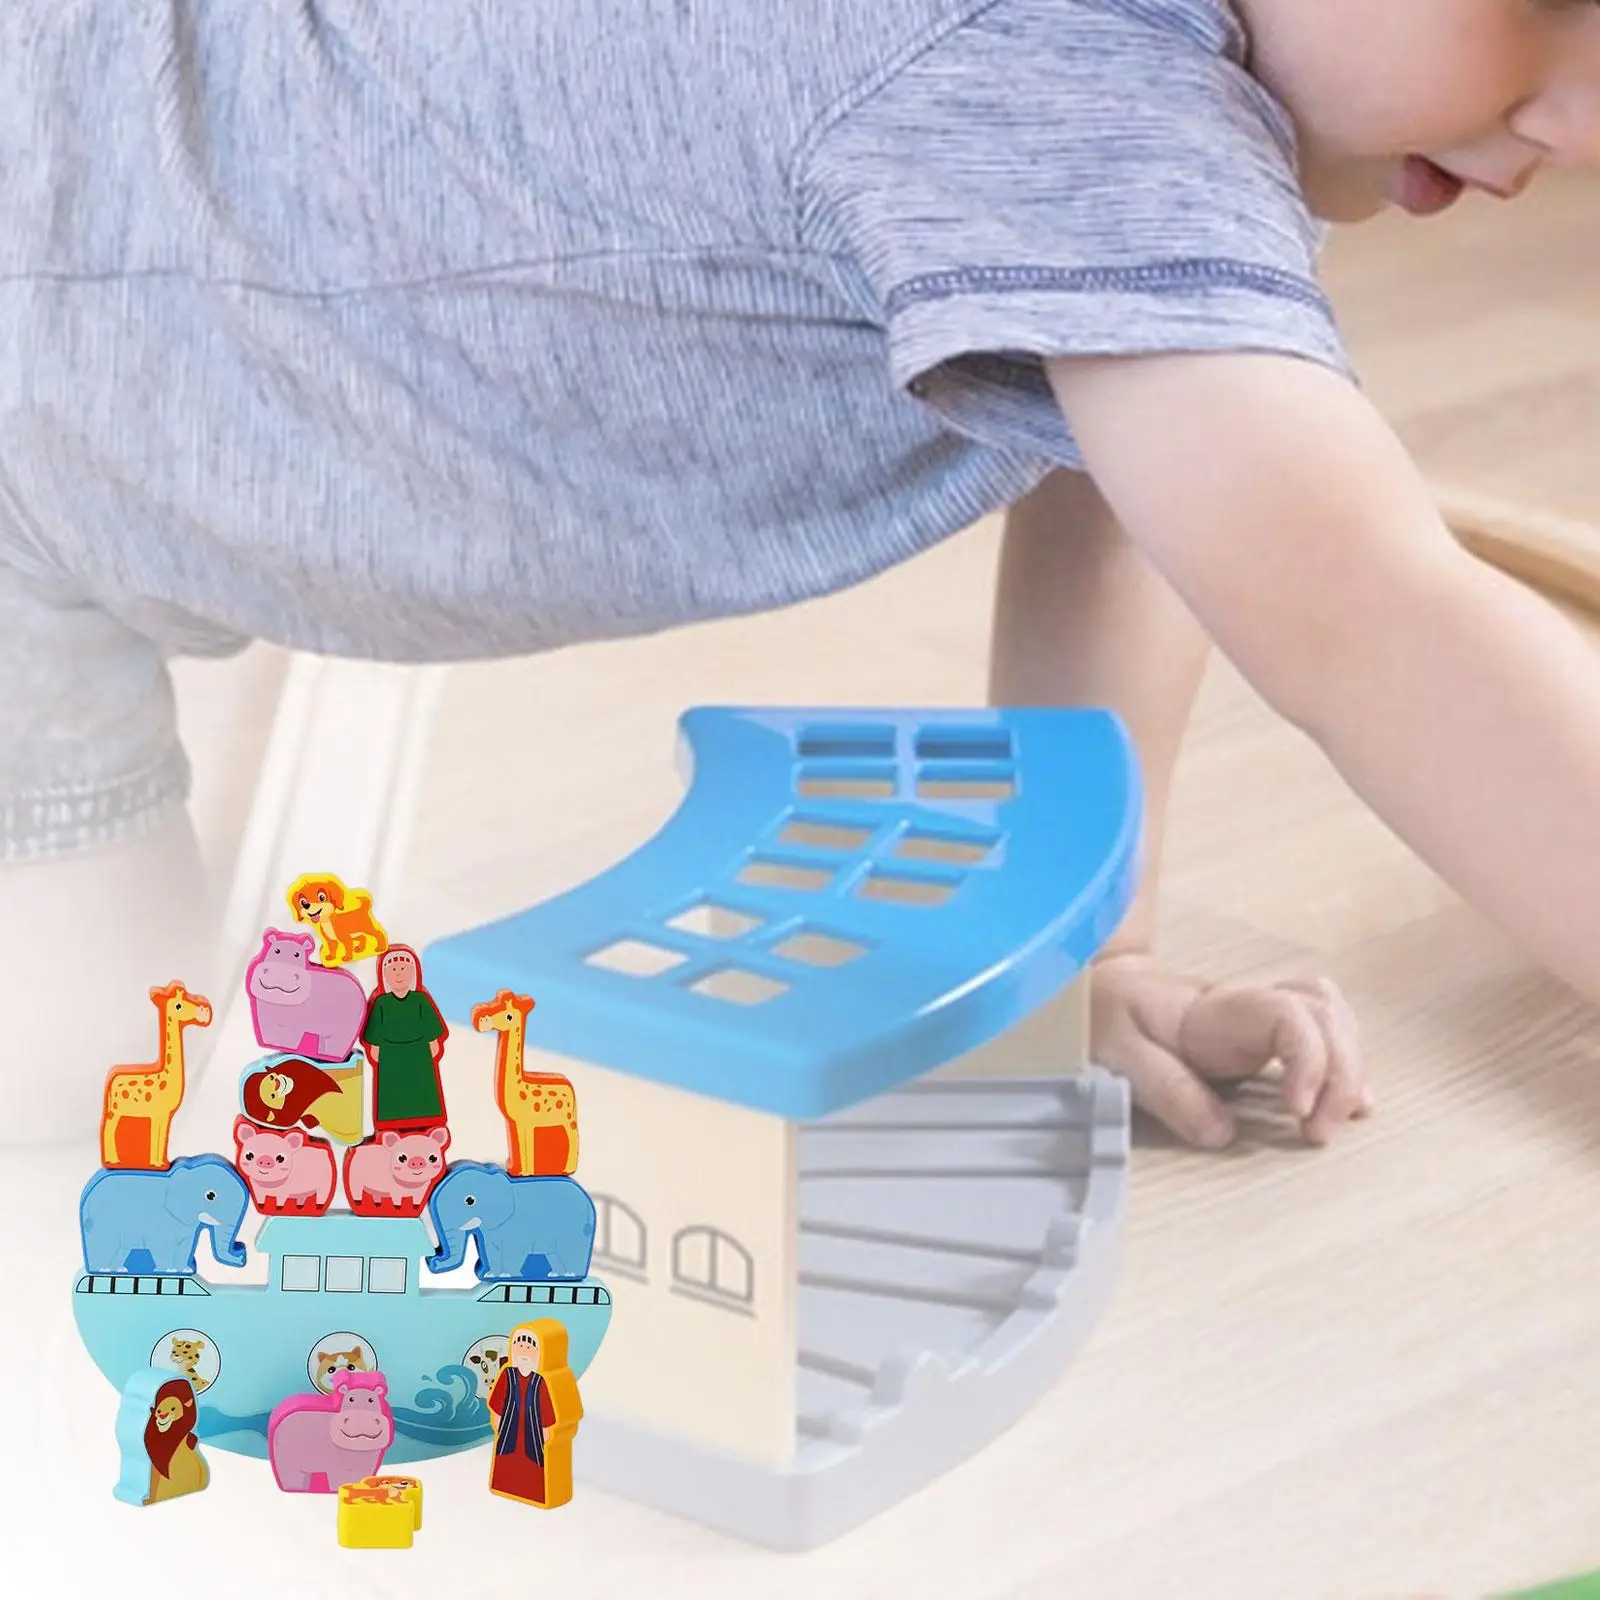 Funny Wooden Blocks Animal Toys Educational Toys Brain Development for Girls Boys Birthday Gifts